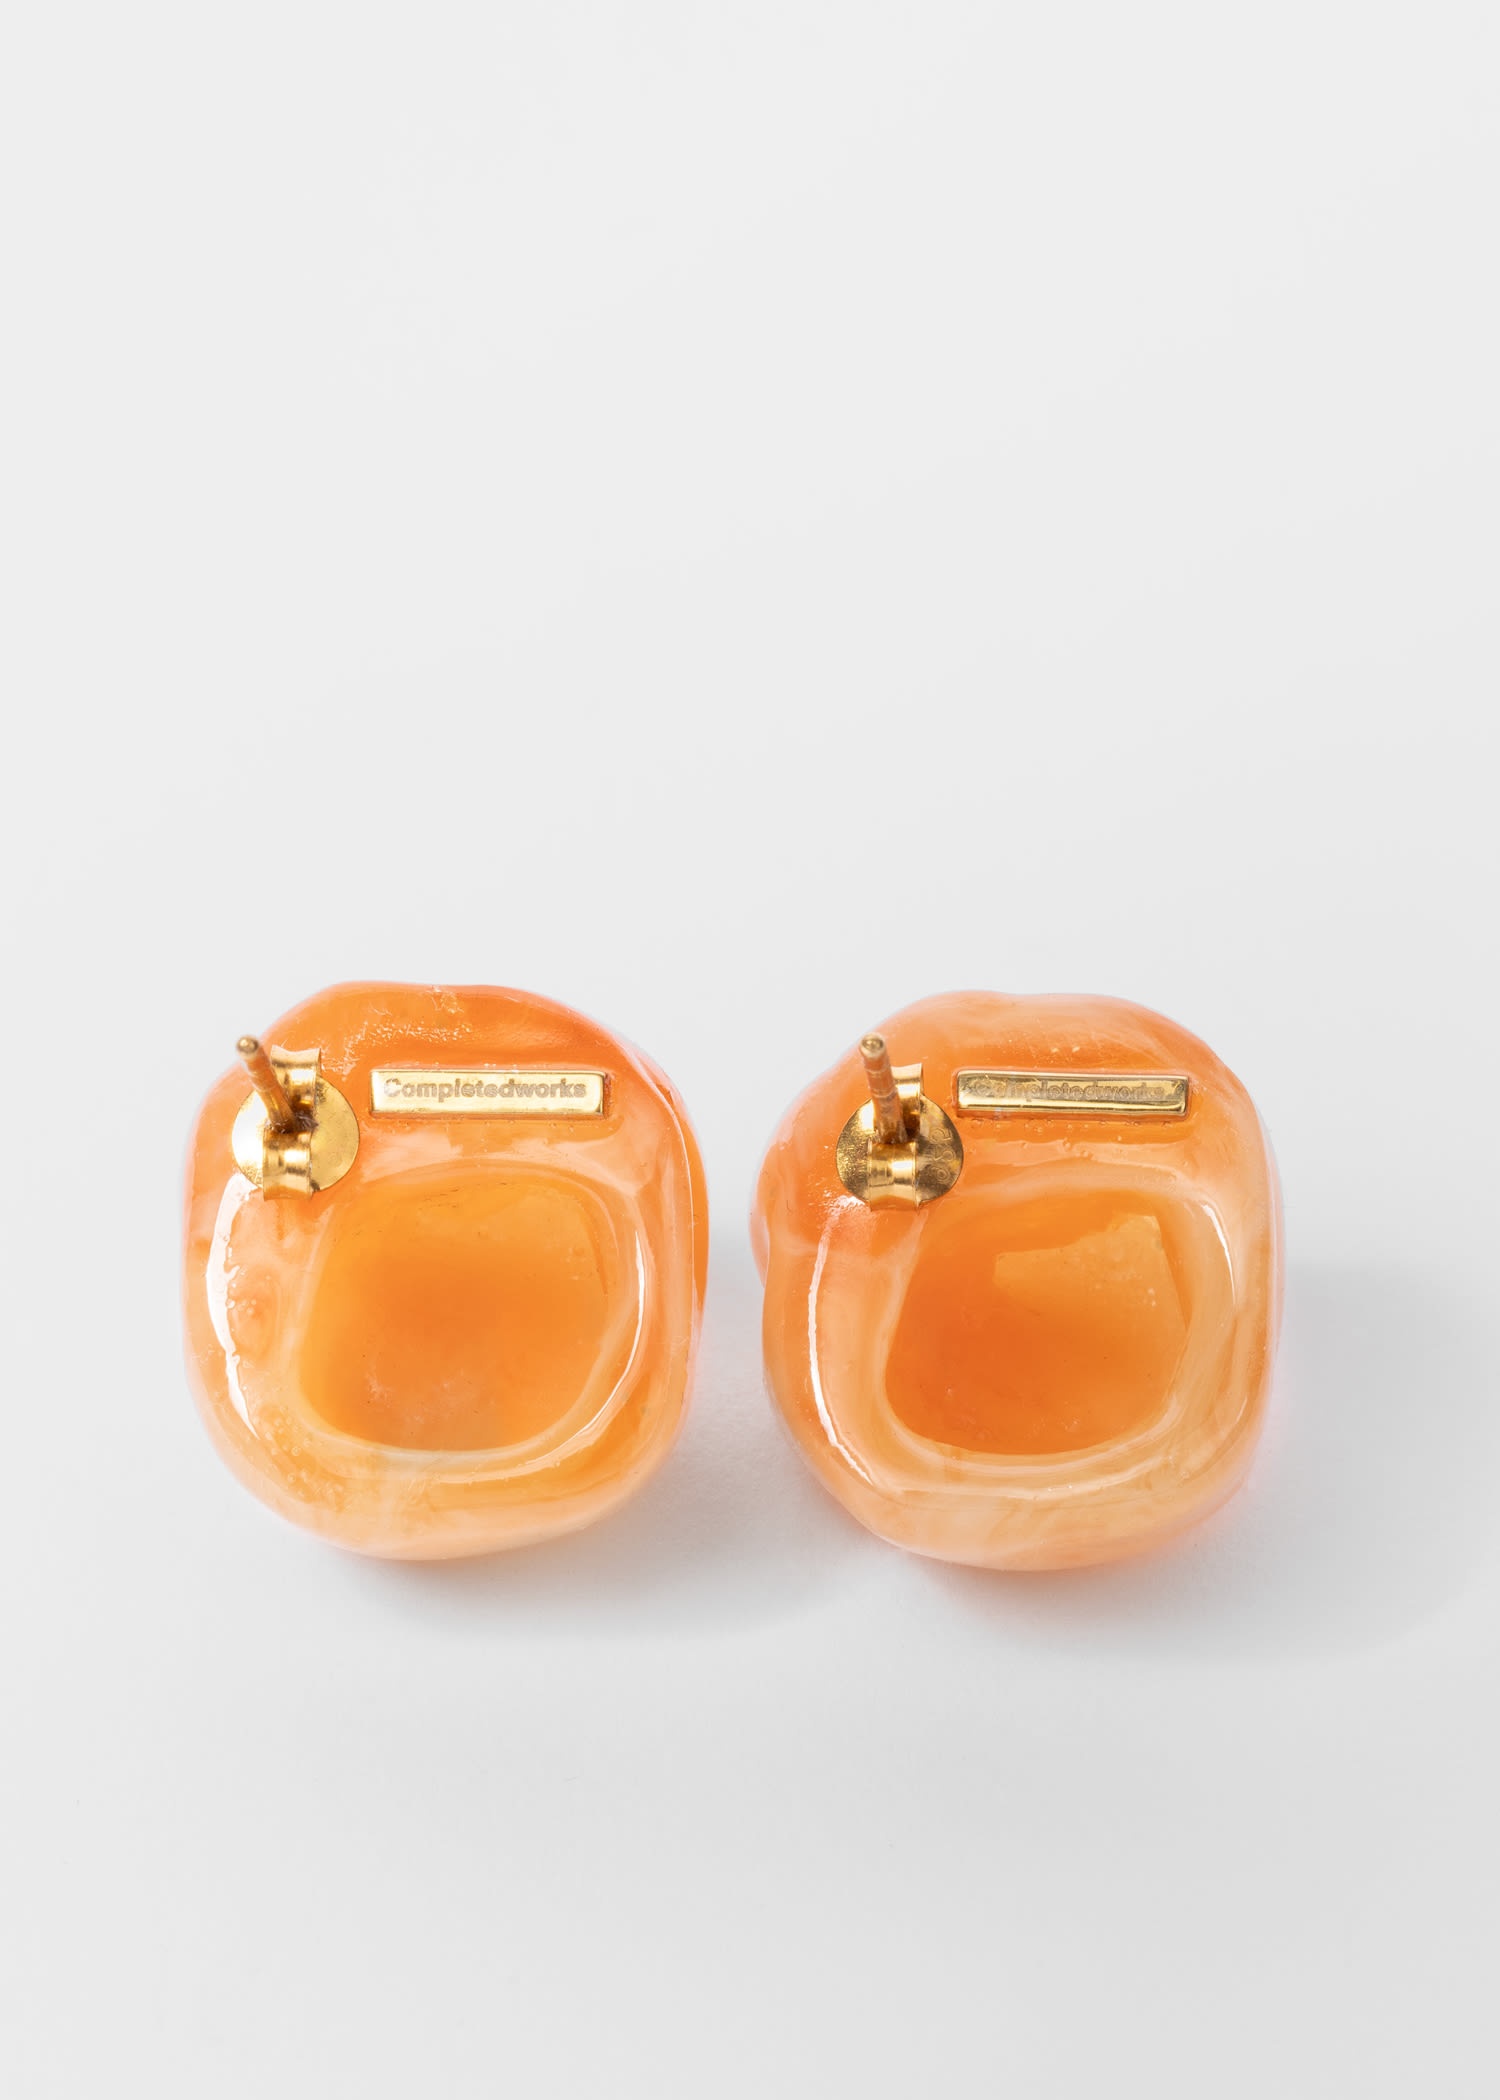 Organic Shape Bio-Resin Earrings by Completedworks - 2